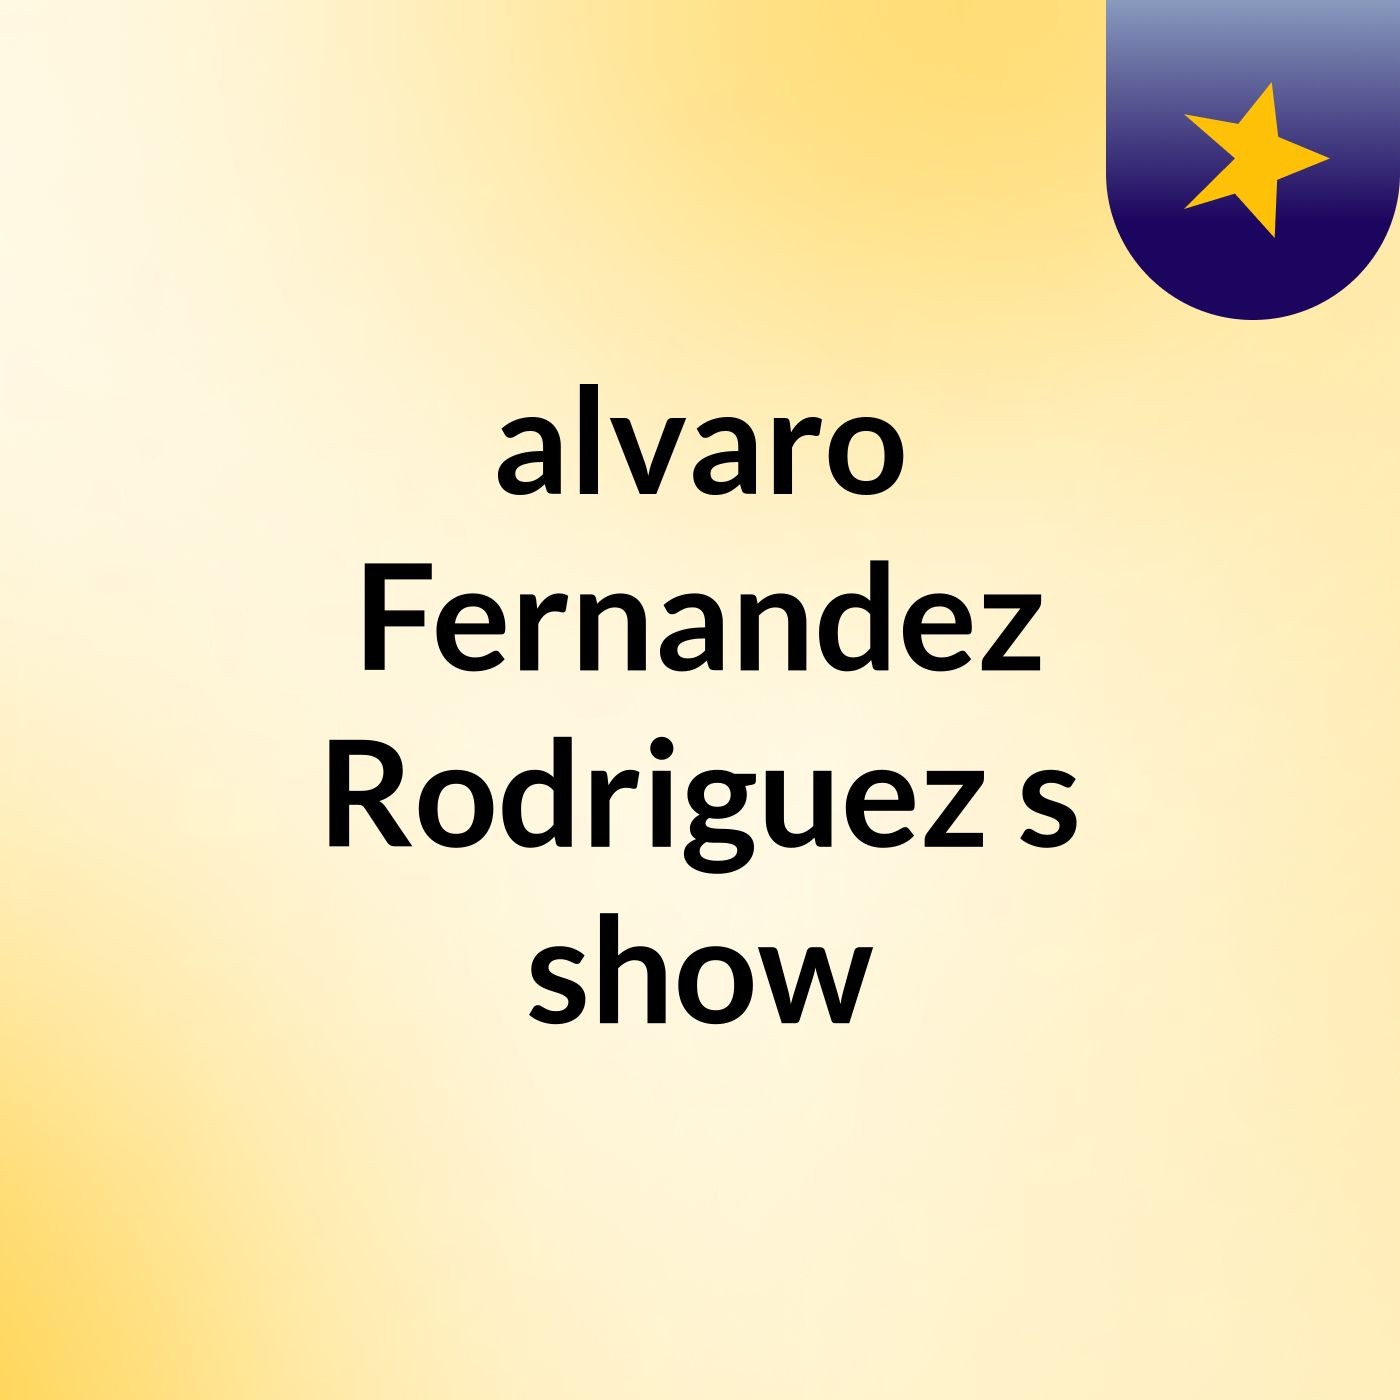 alvaro Fernandez Rodriguez's show